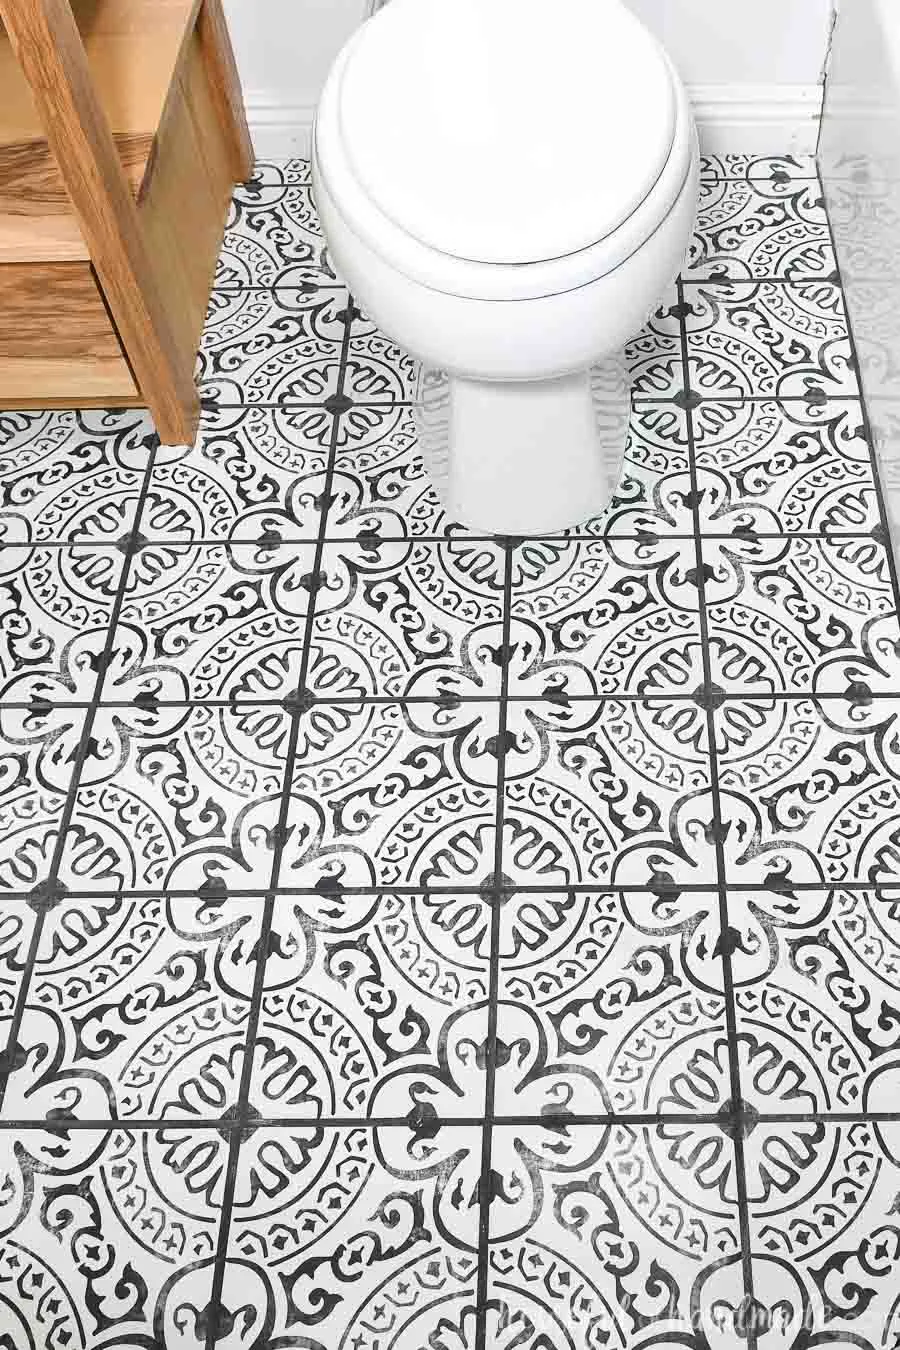 Laying Floor Tiles In A Small Bathroom, Tile A Bathroom Floor